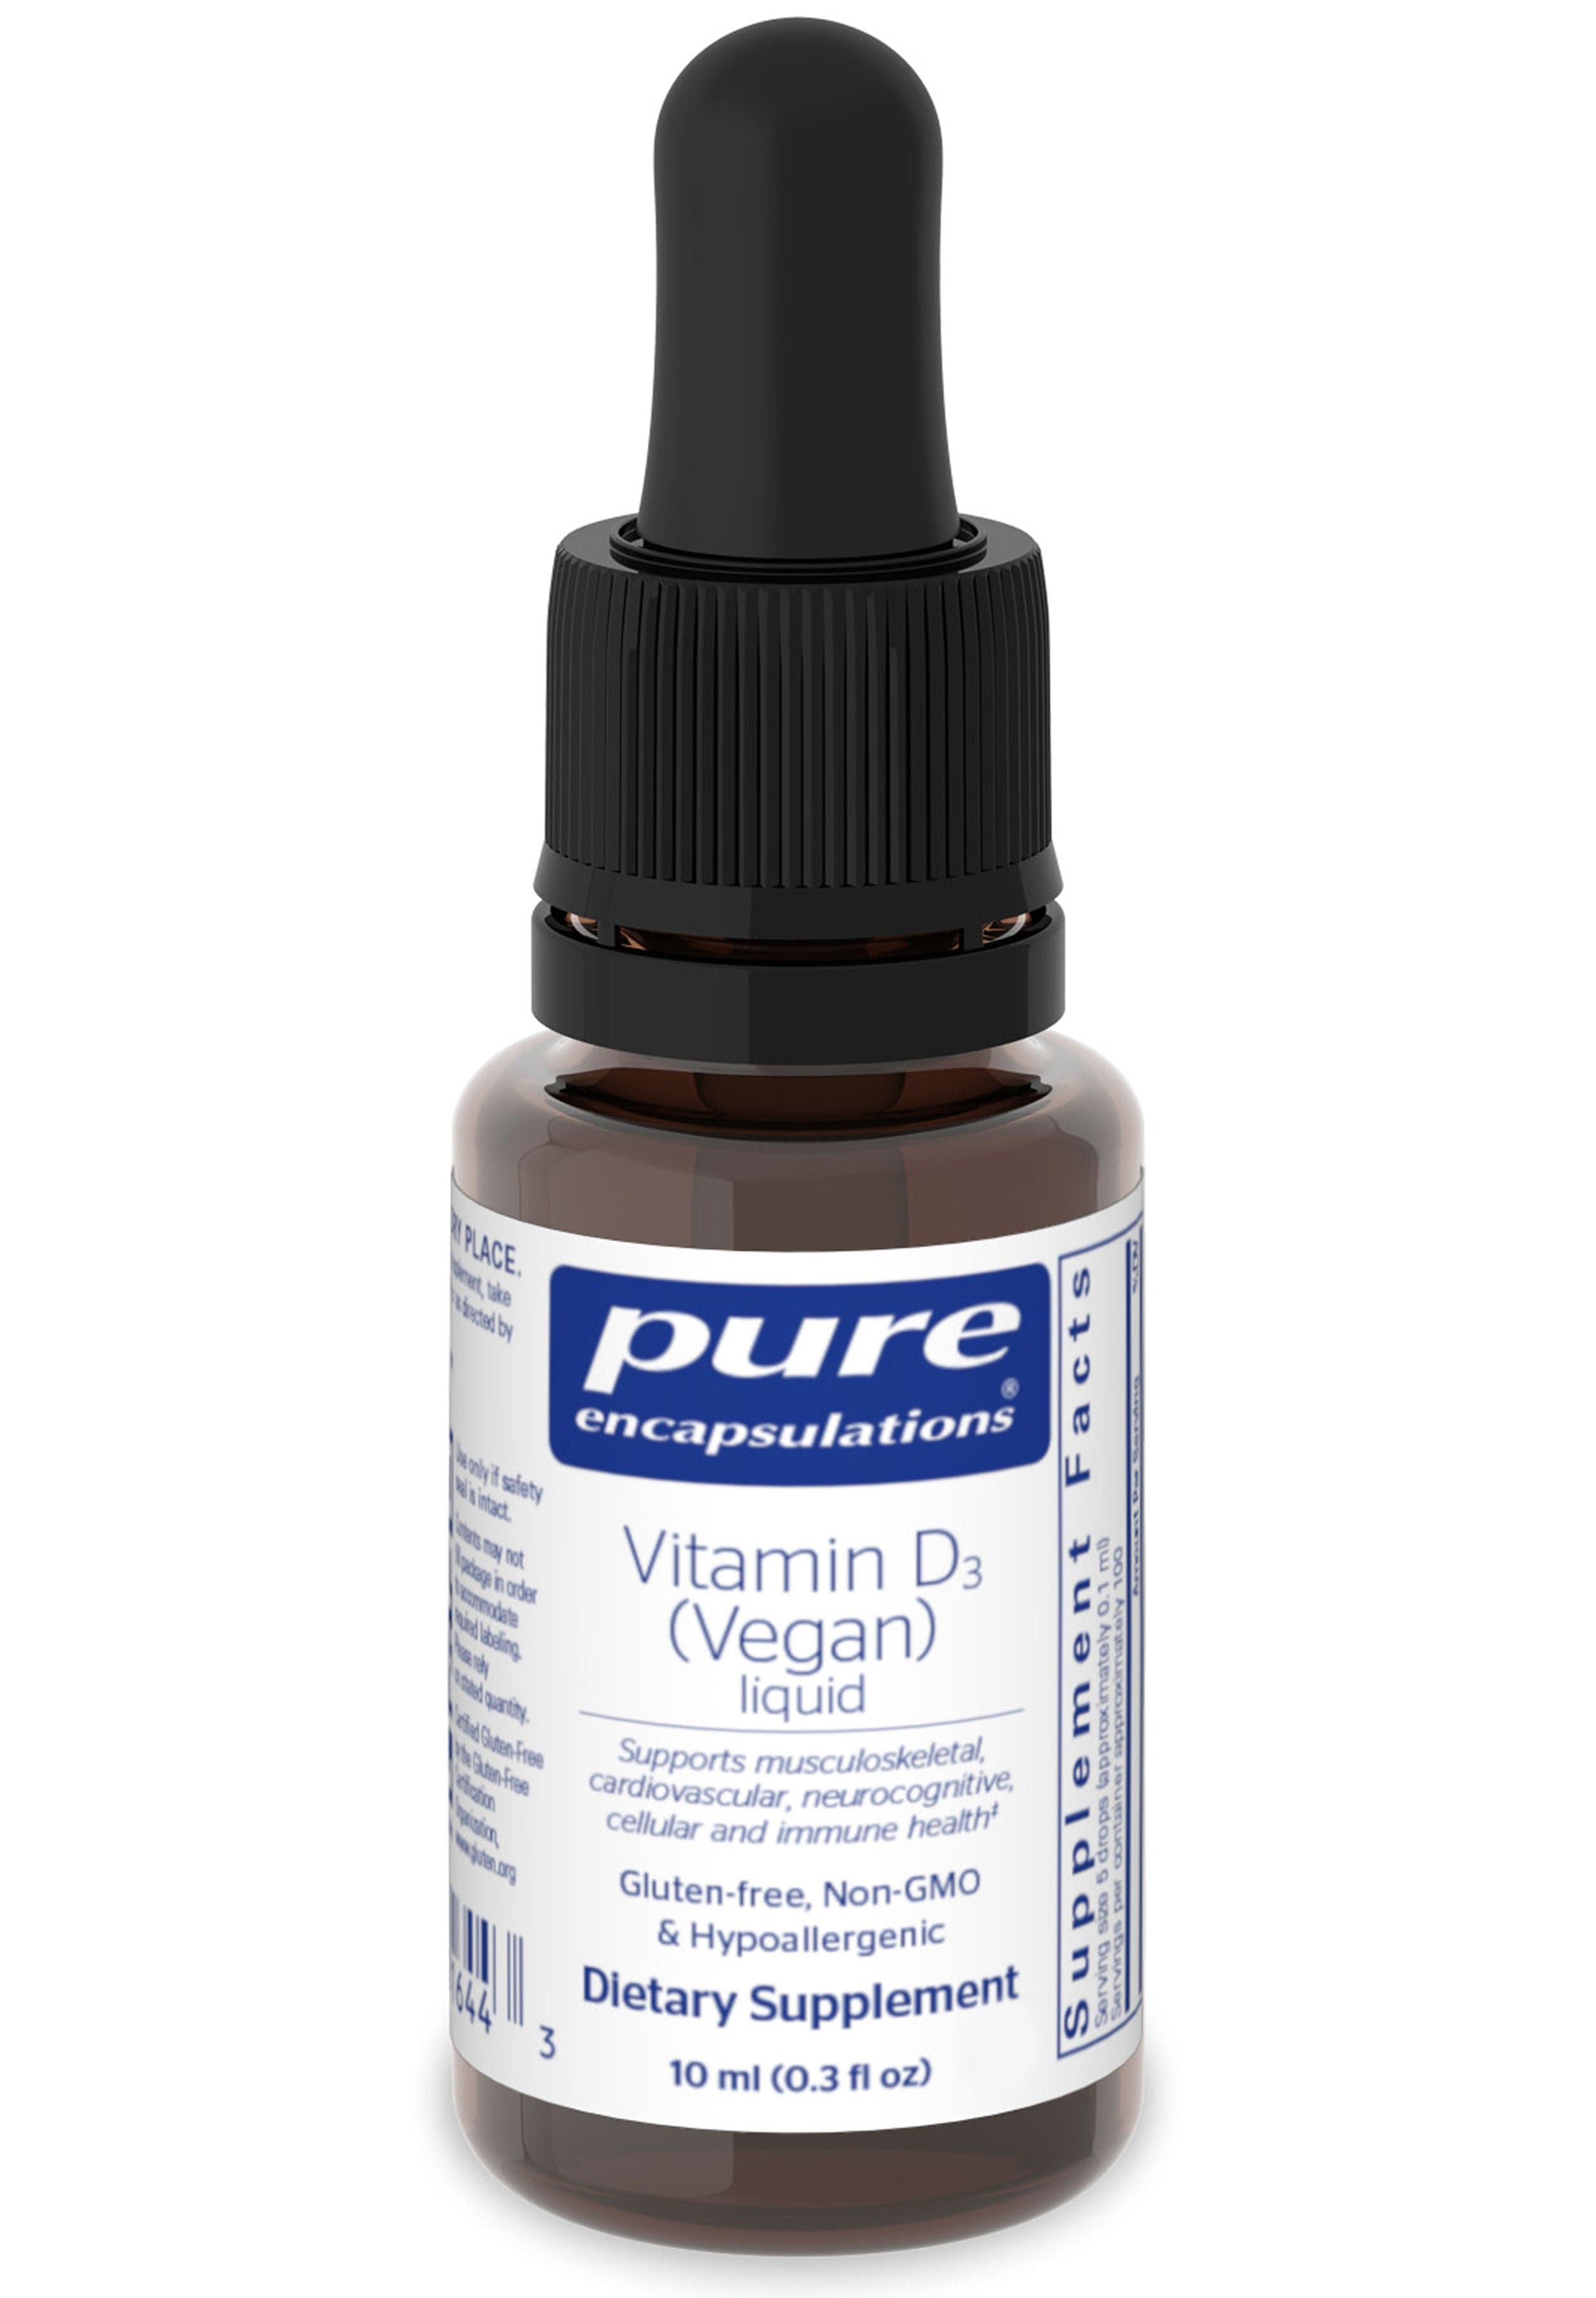 Pure Encapsulations Vitamin D3 (Vegan) liquid